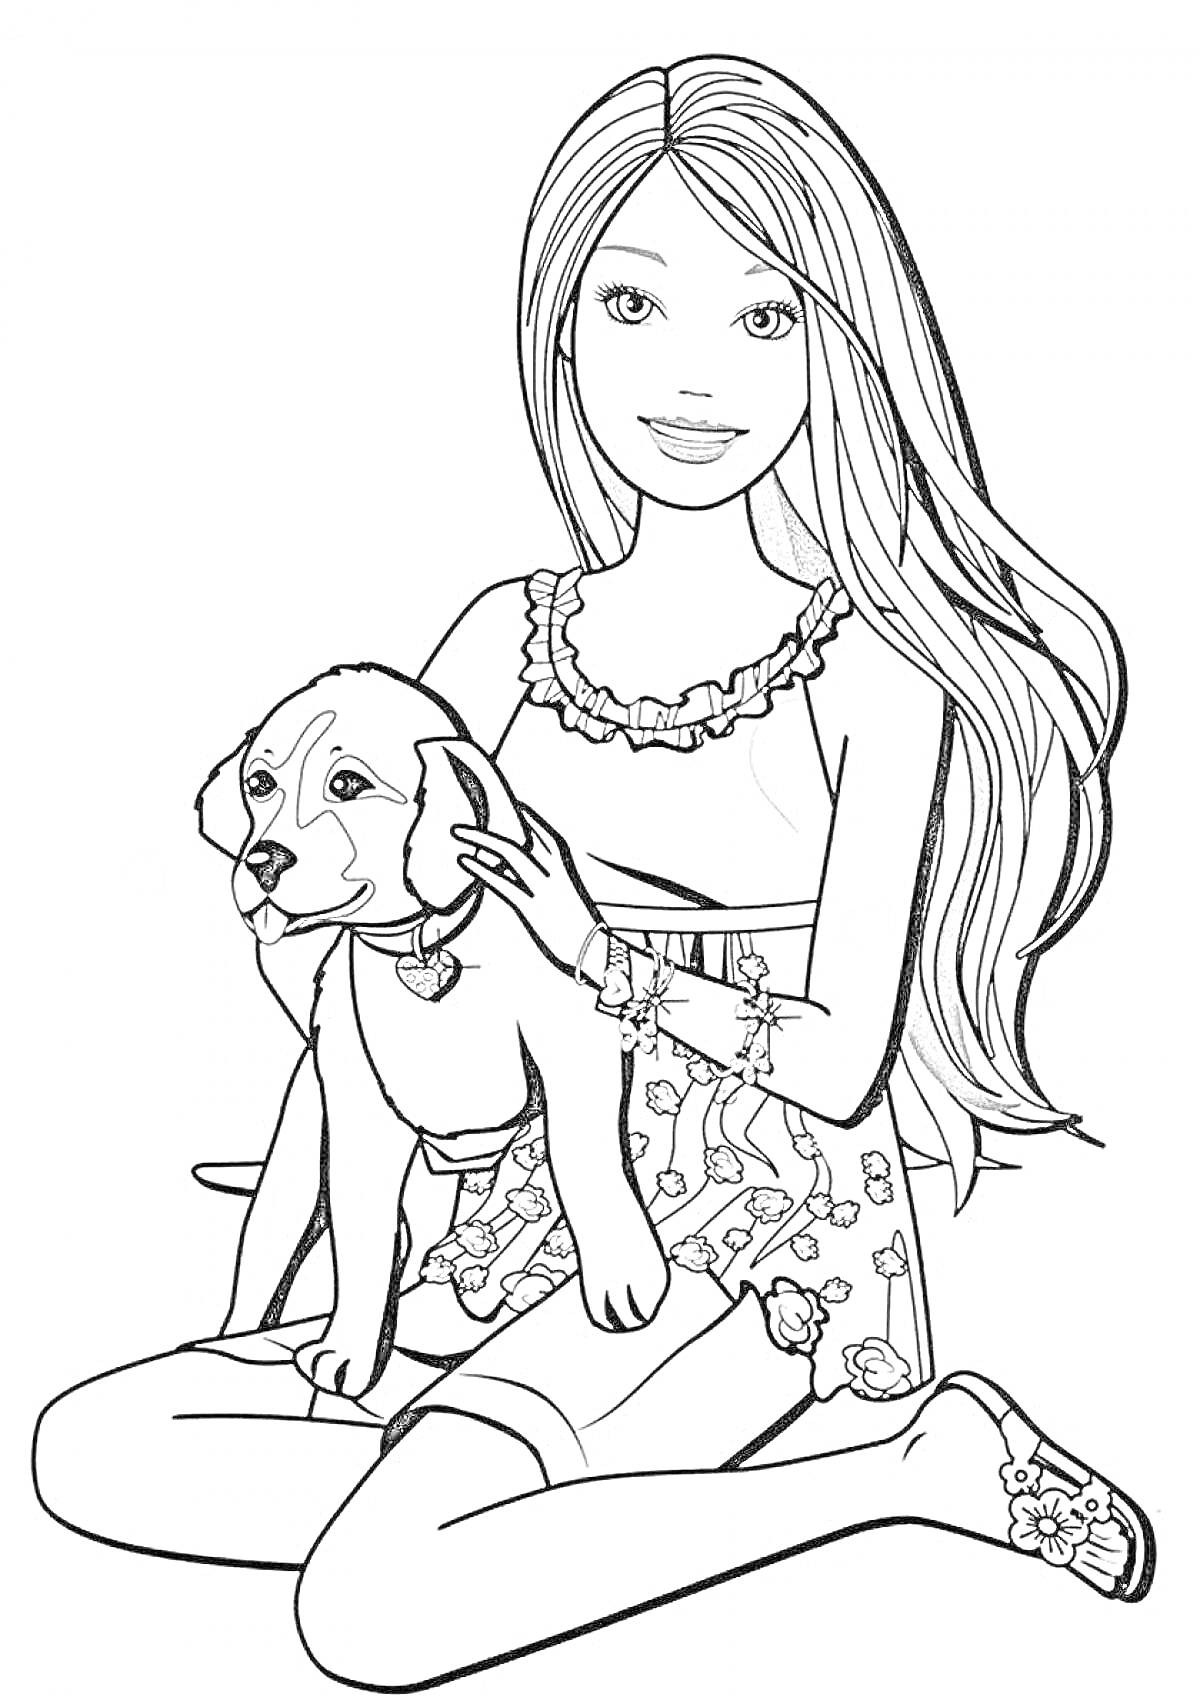 Раскраска Девочка с щенком на руках сидит на полу